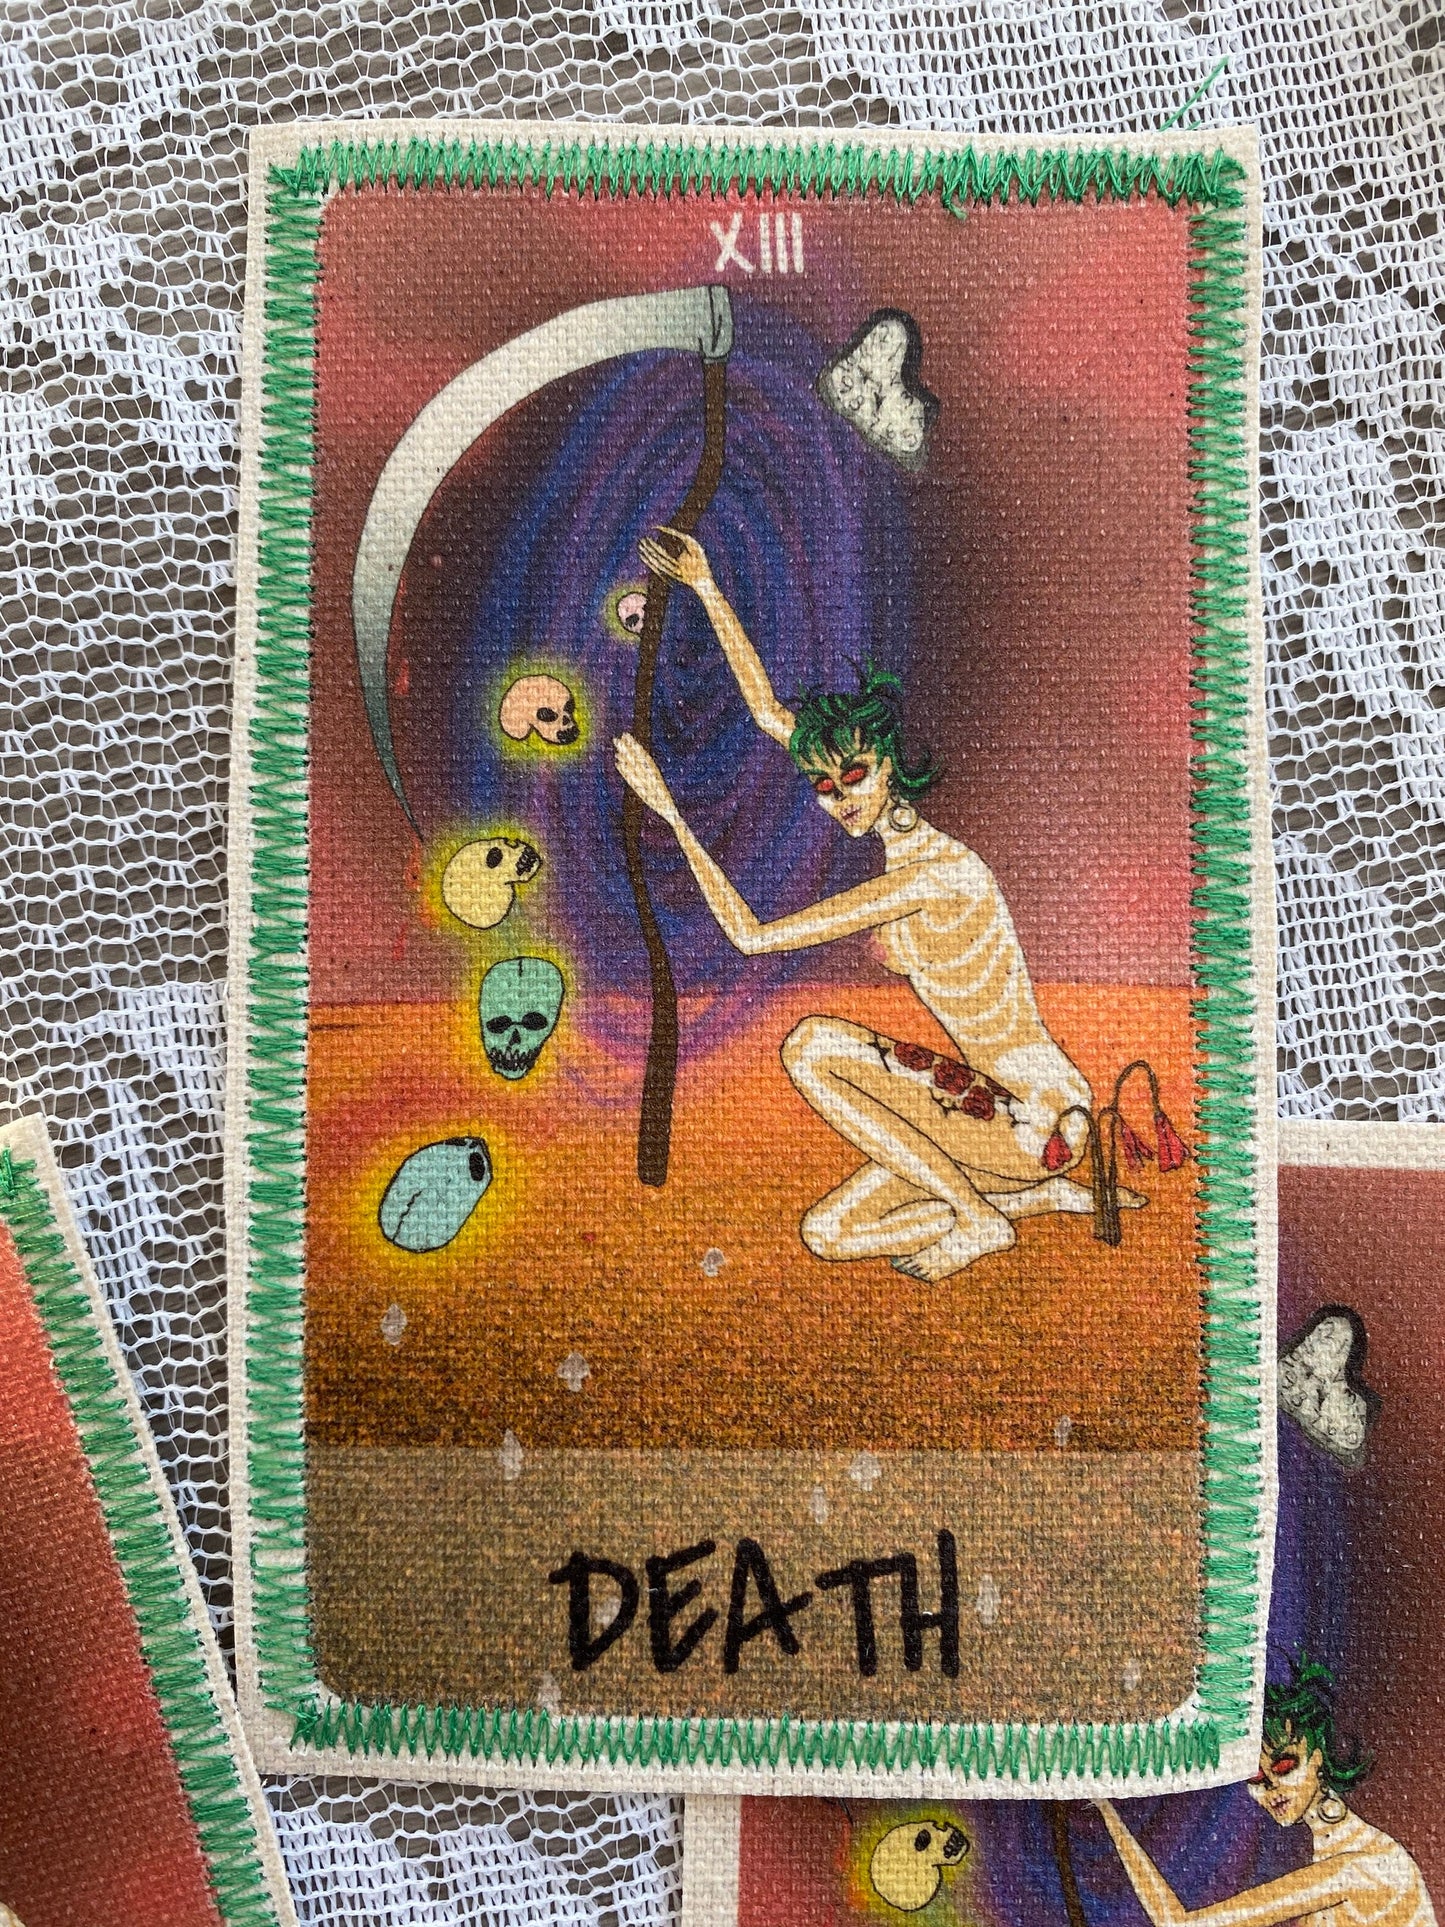 Death Patch